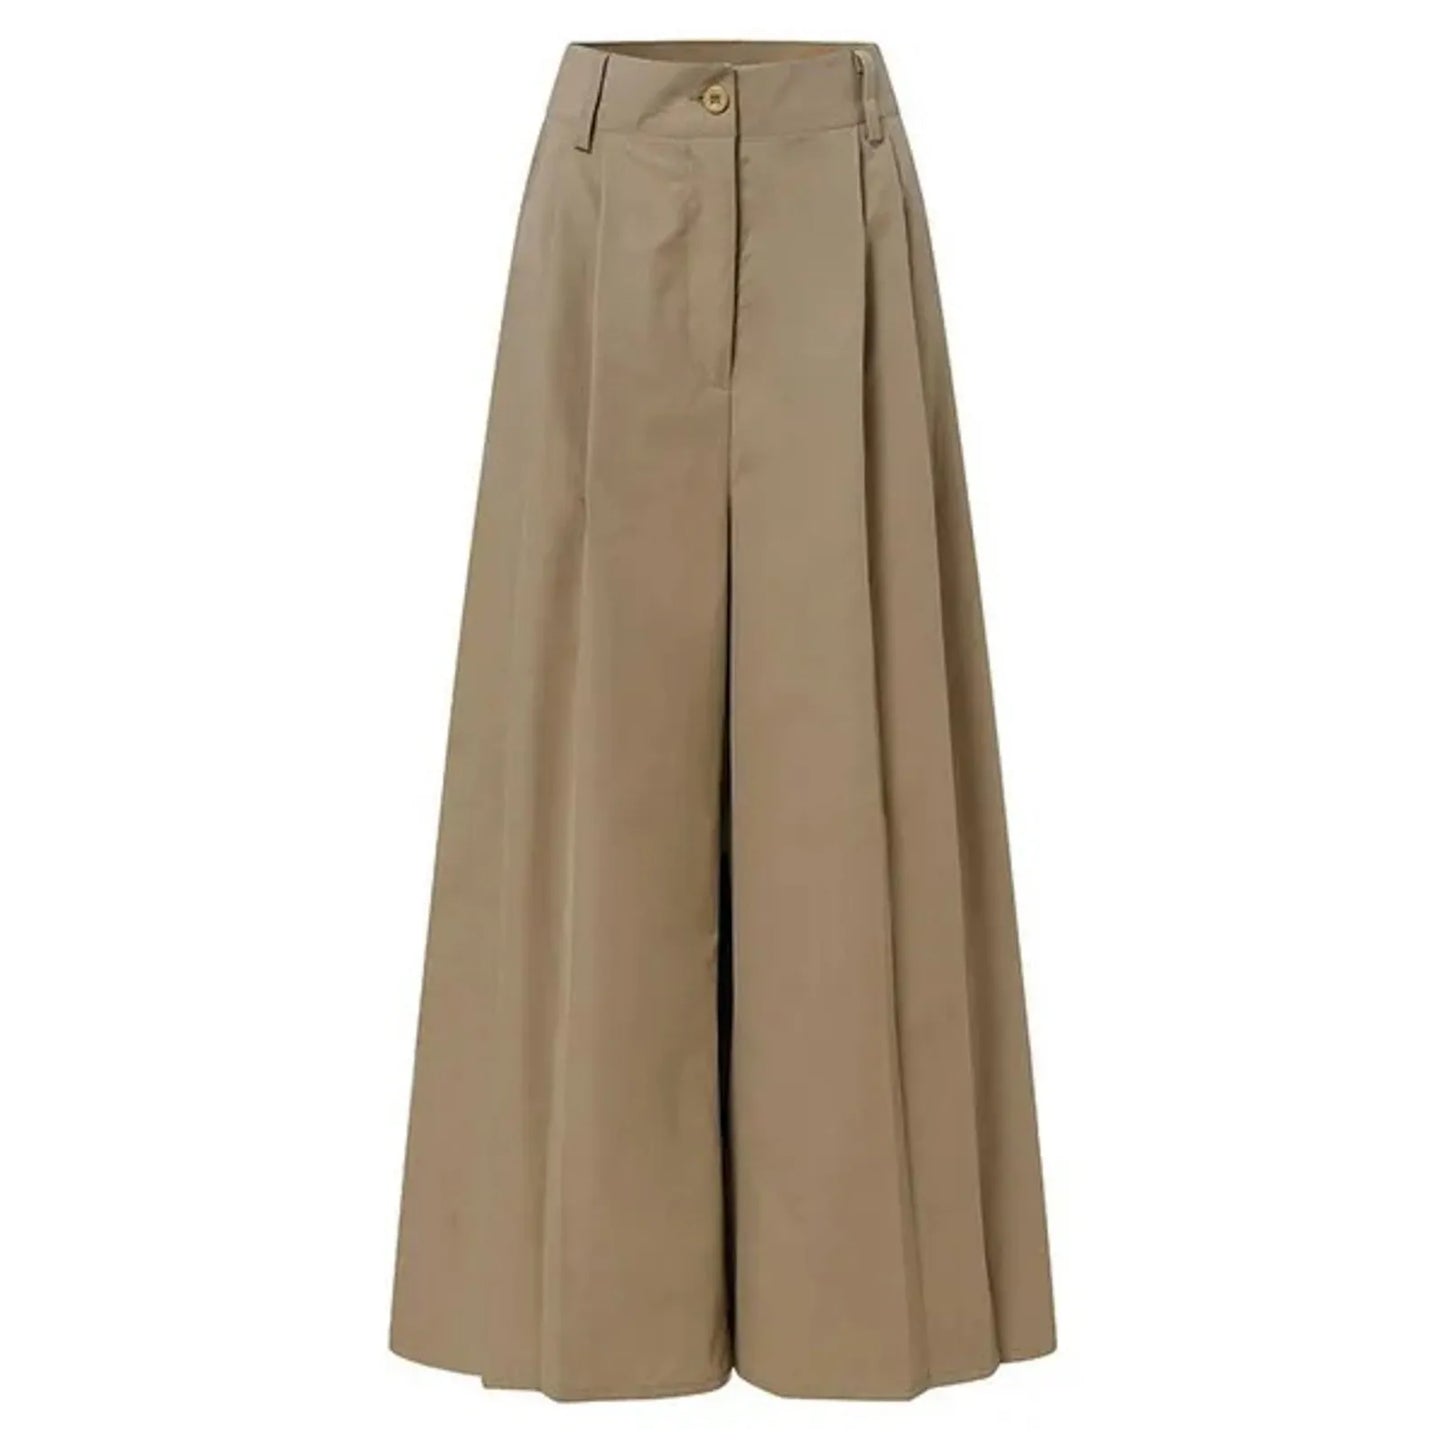 Pants For Women Palazzo Pants Summer Printed Cropped Cotton Linen Comfy Baggy Tall Sweatpants Women Yoga Pant Pocket